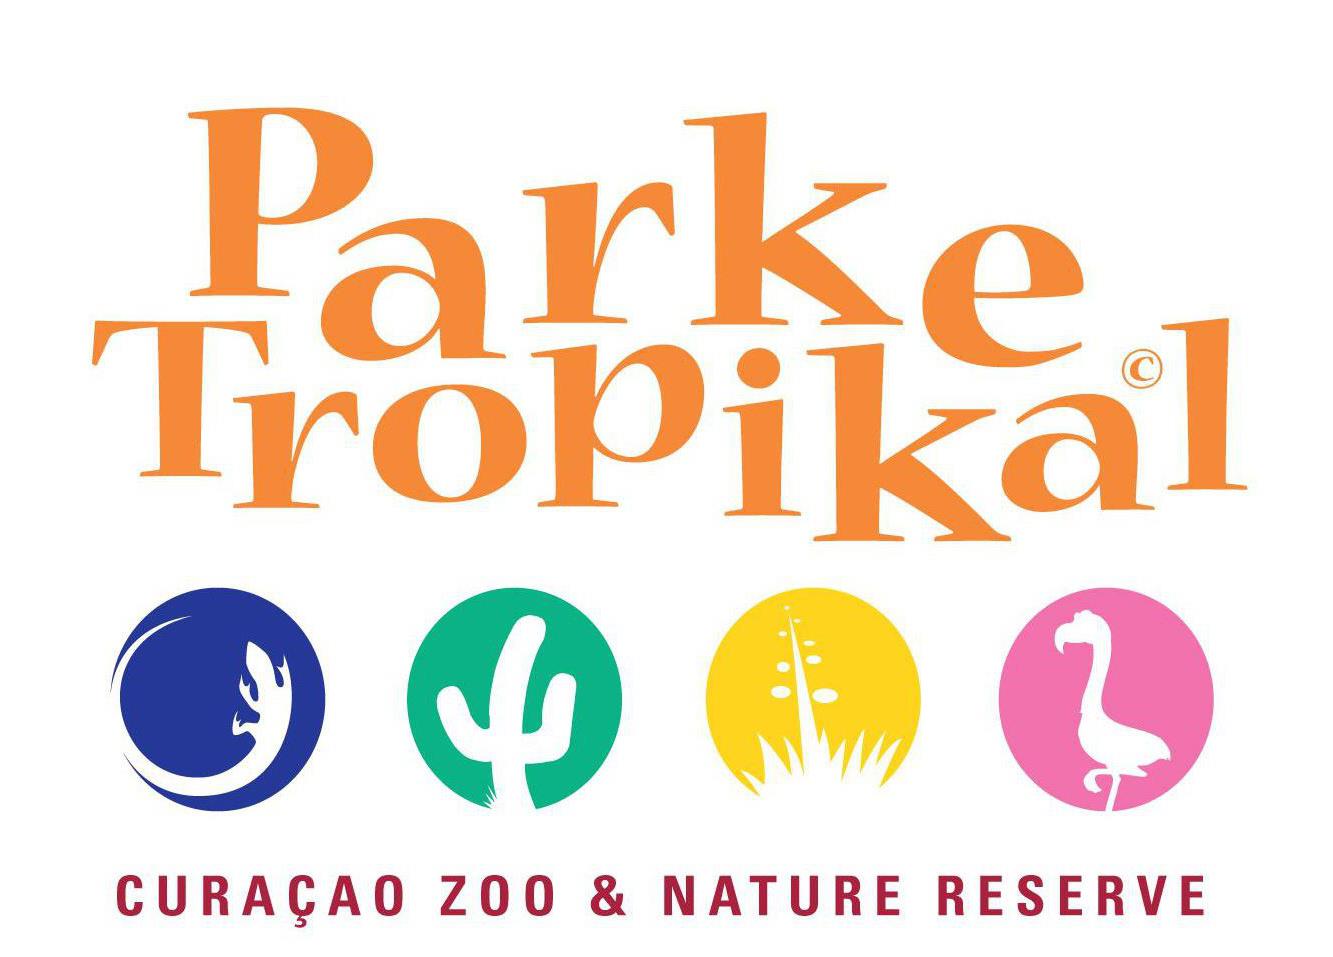 Direktiva Fundashon Parke Tropikal ta keda positivo